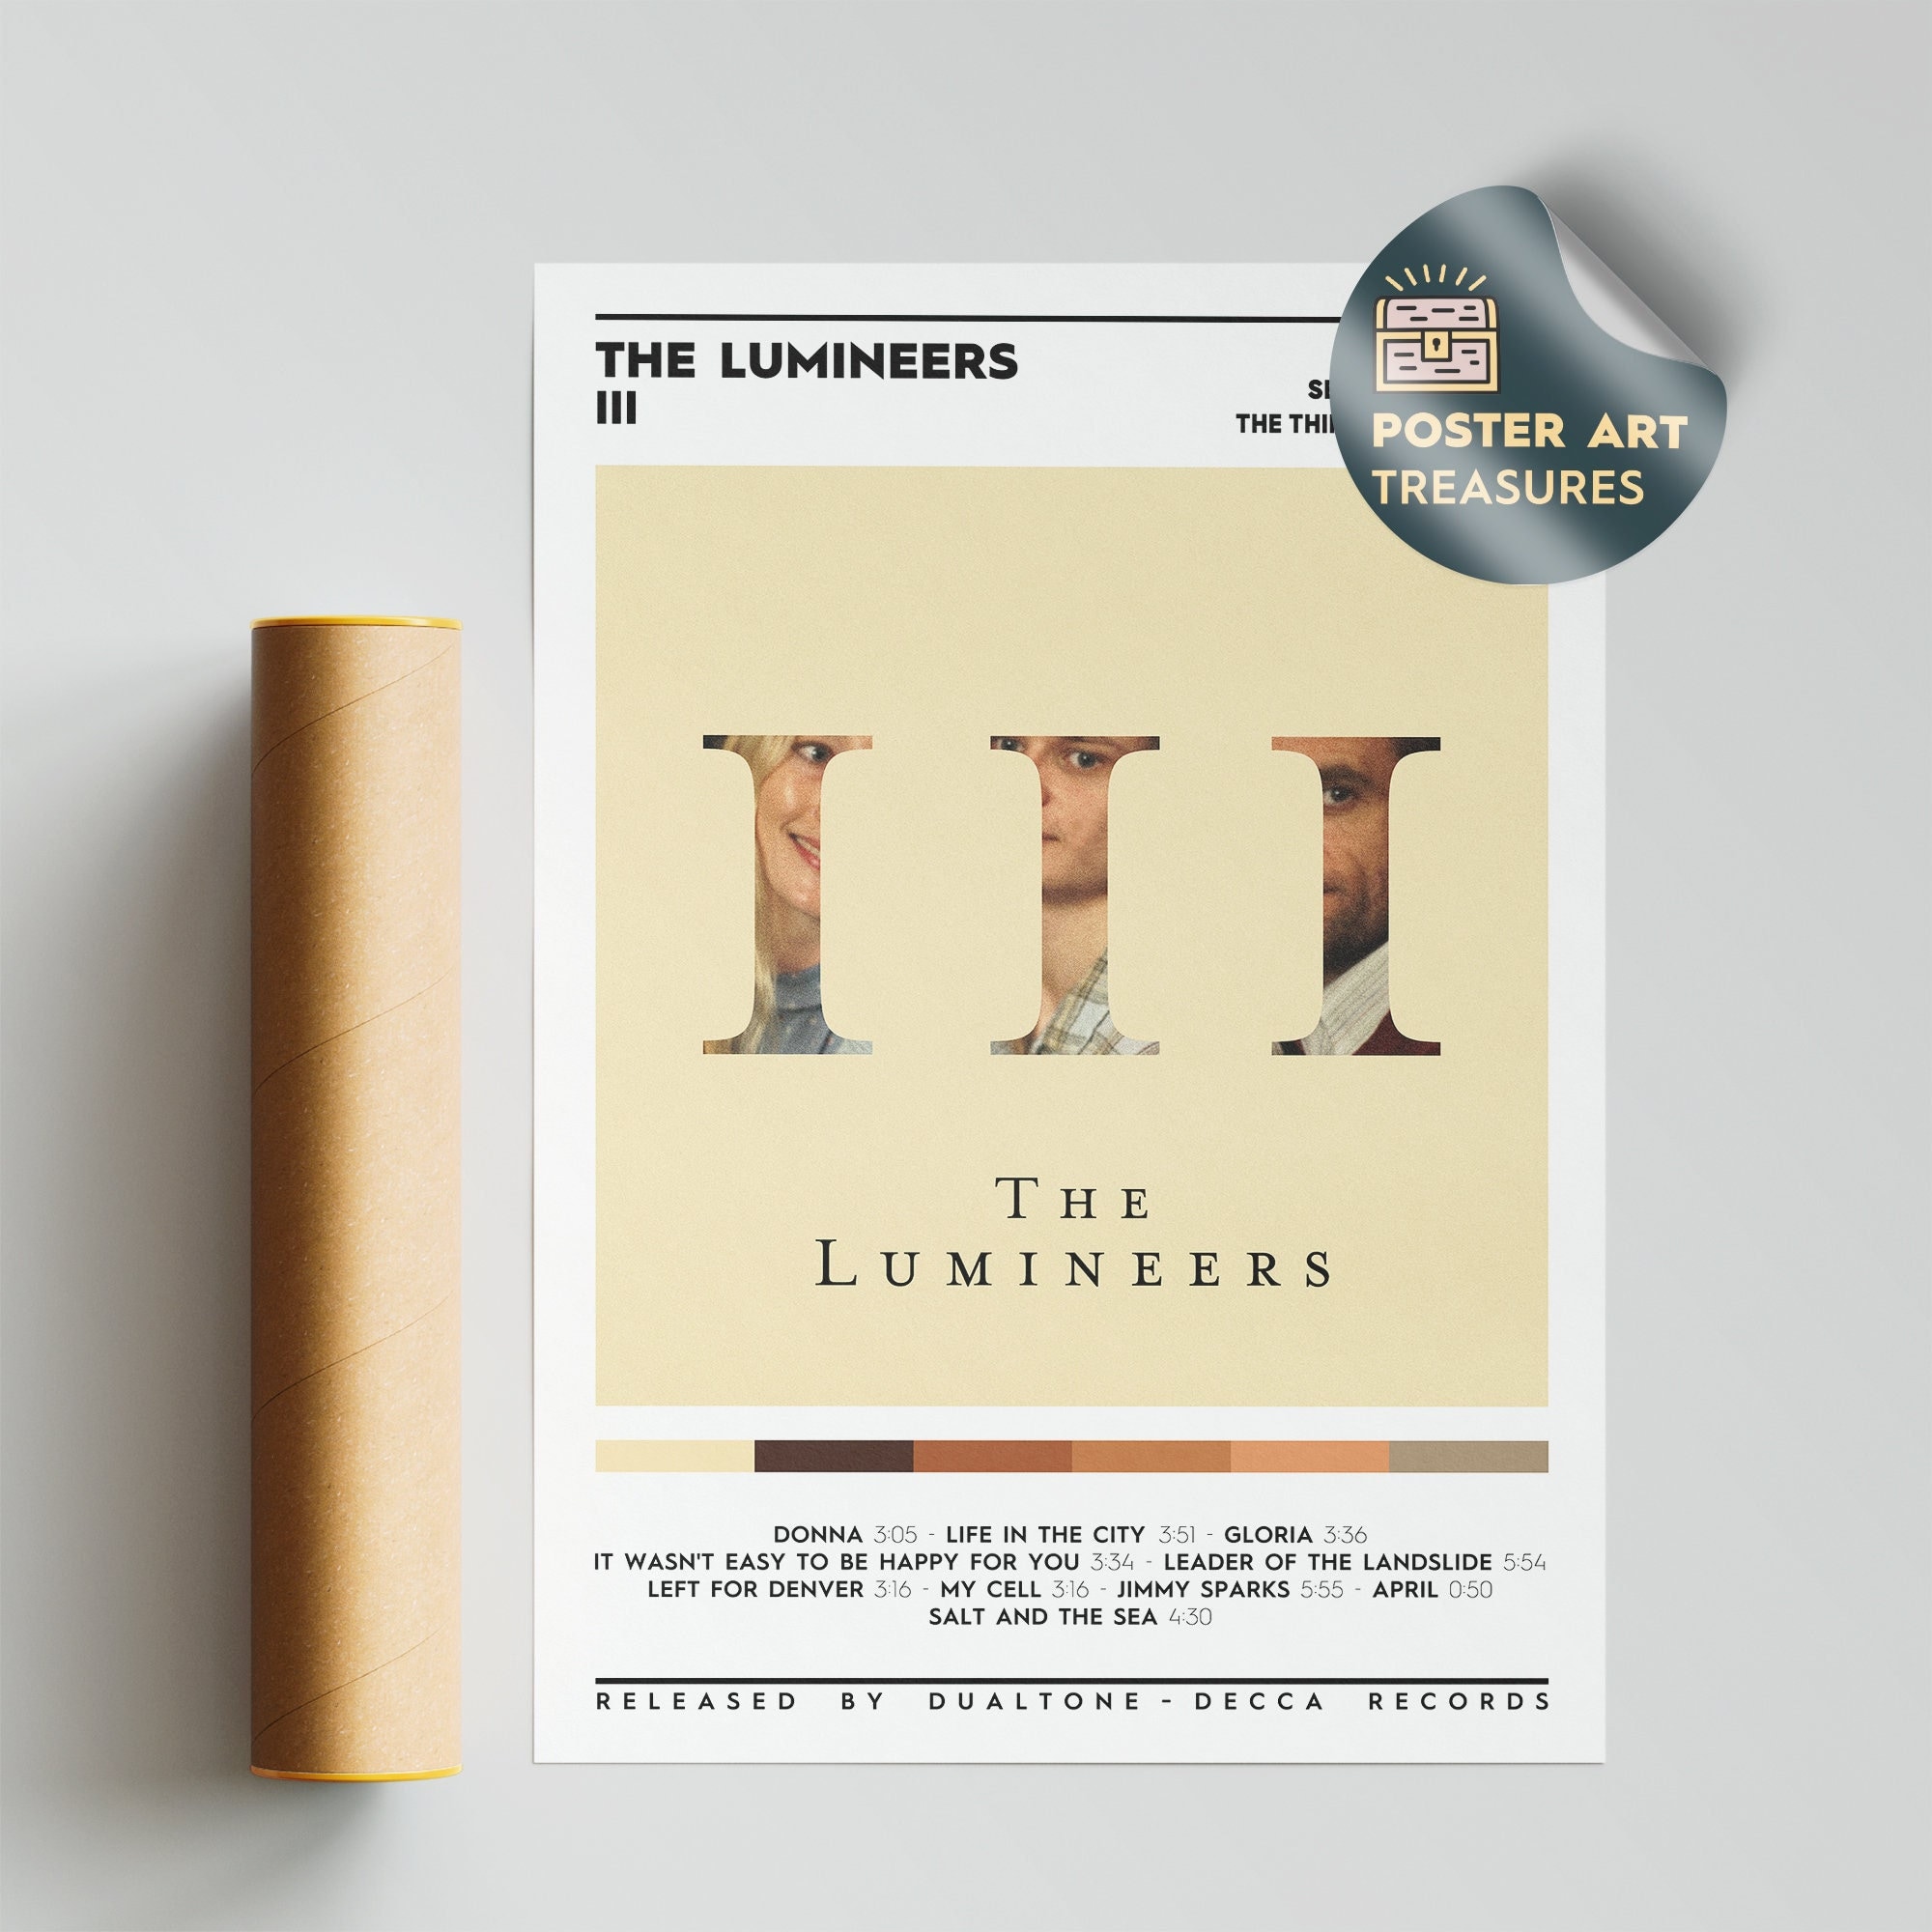 The Lumineers - III, Album Cover Poster, The Lumineers Poster, Brightside Album Poster